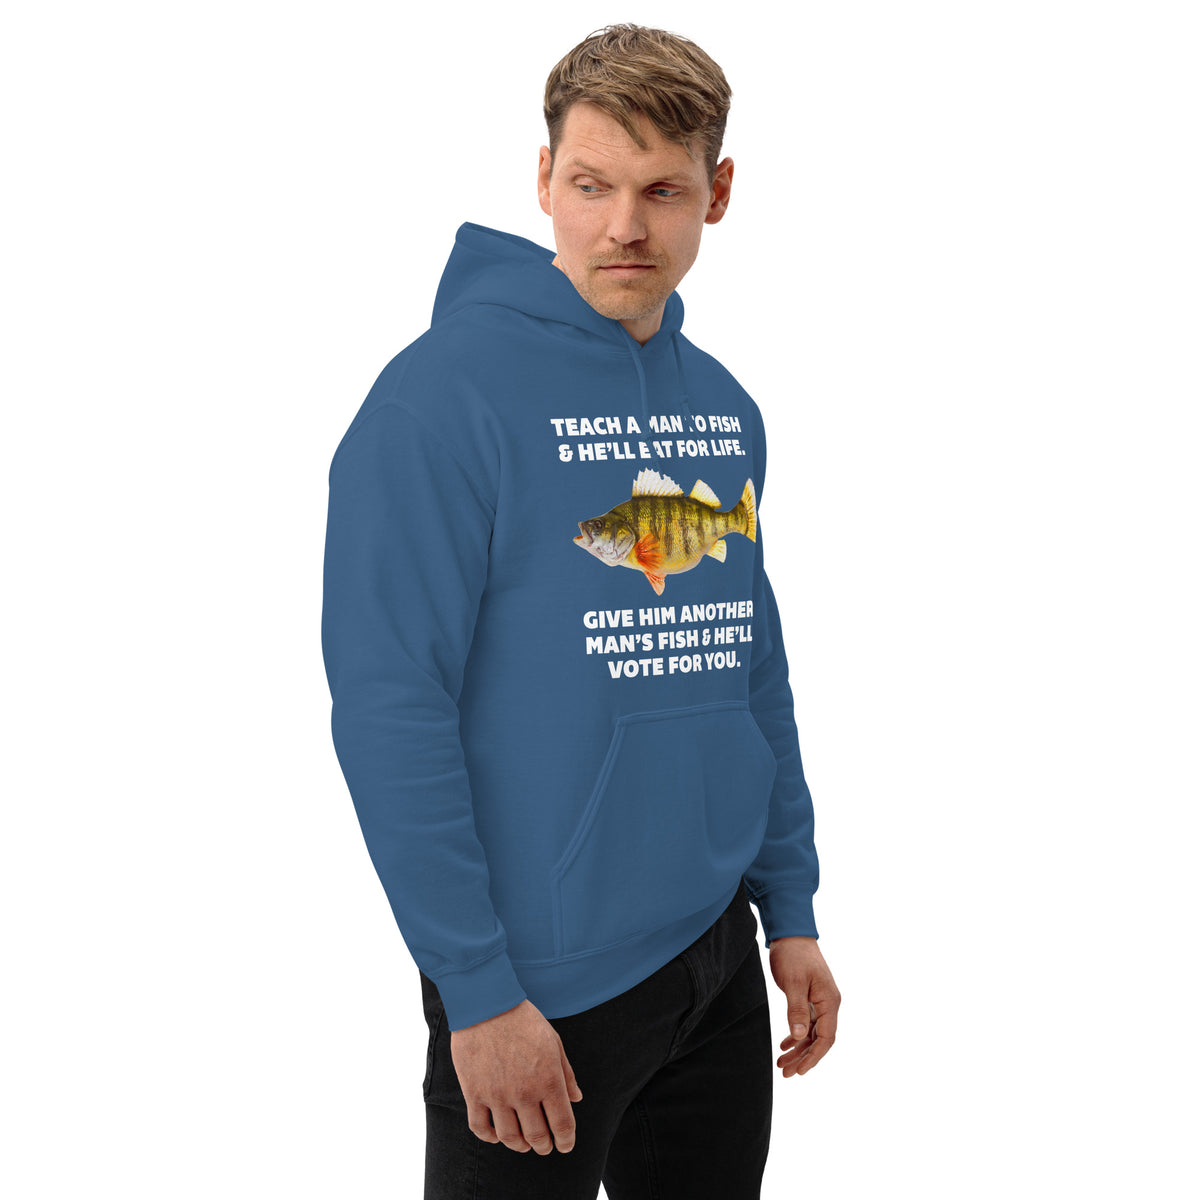 Teach A Man To Fish Hooded Sweatshirt - Liberty Maniacs